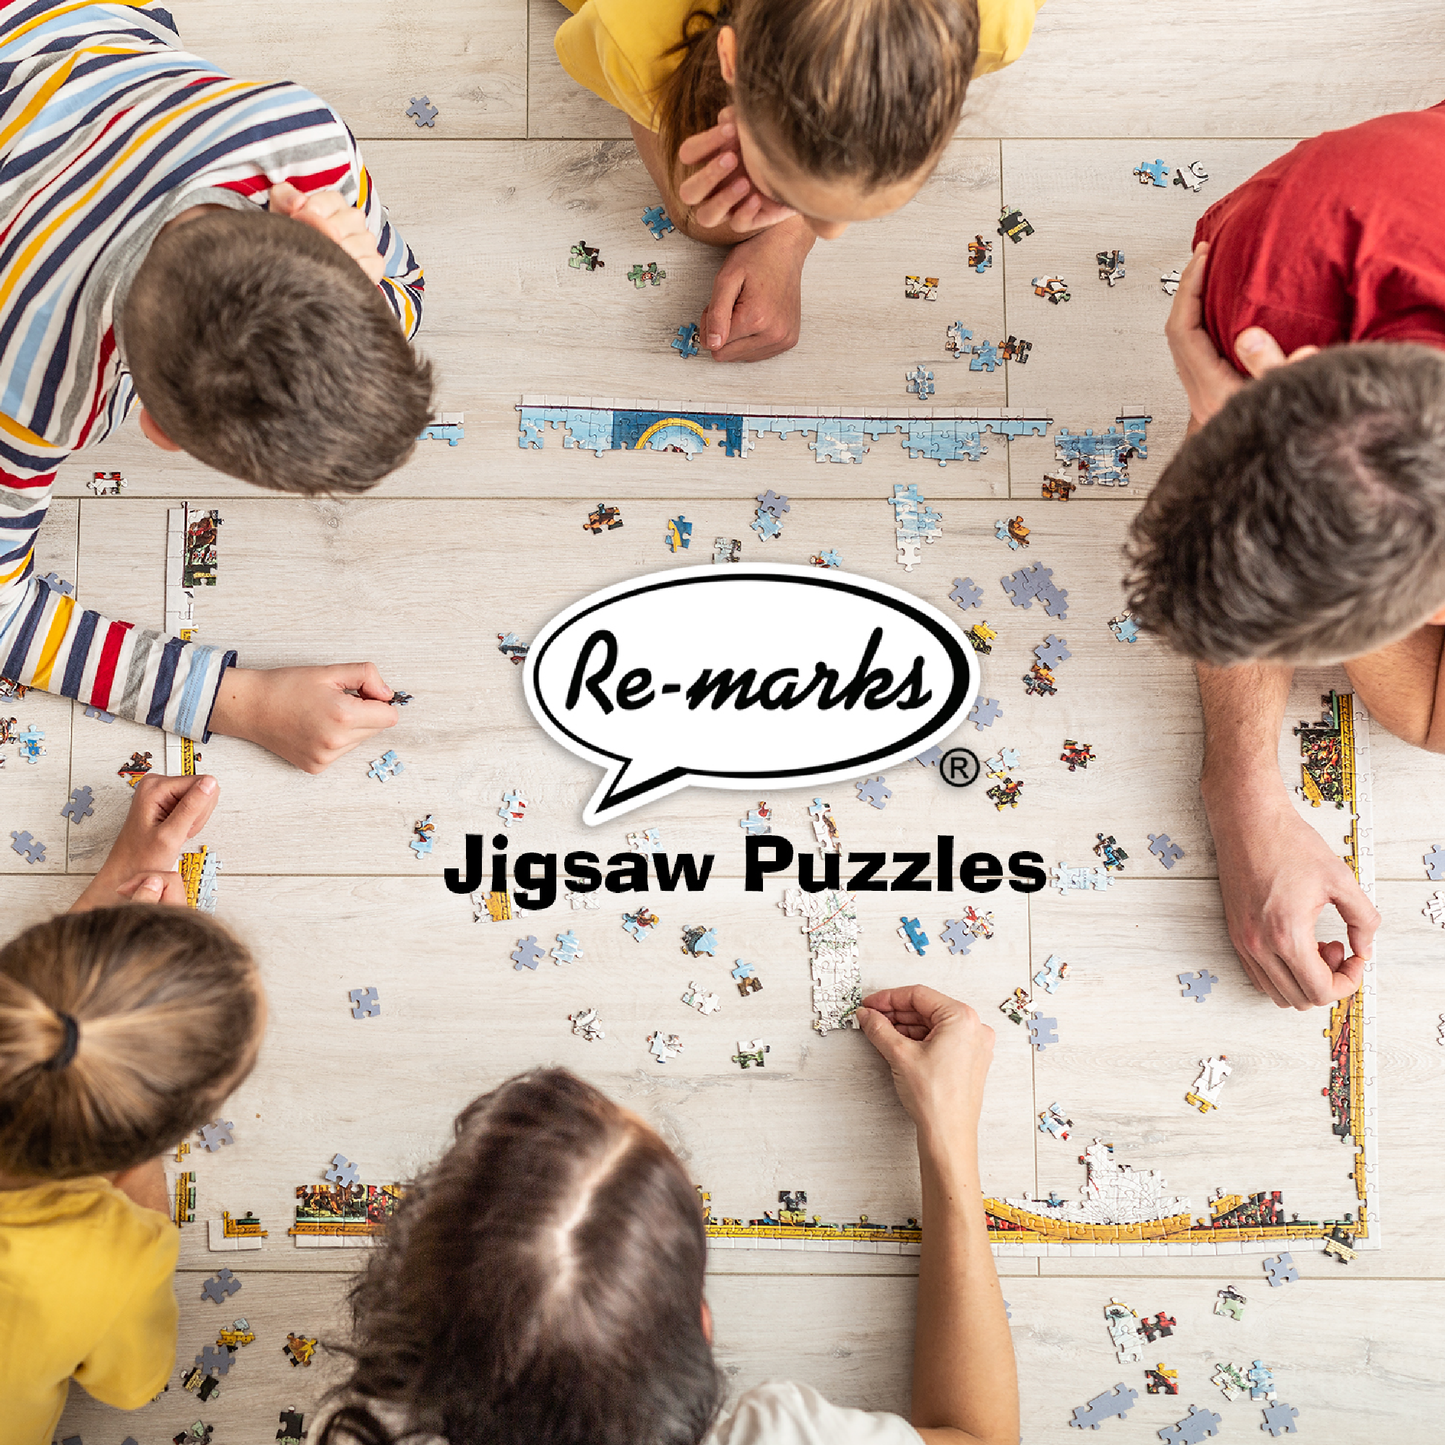 Garden 300-Piece Jigsaw Puzzle